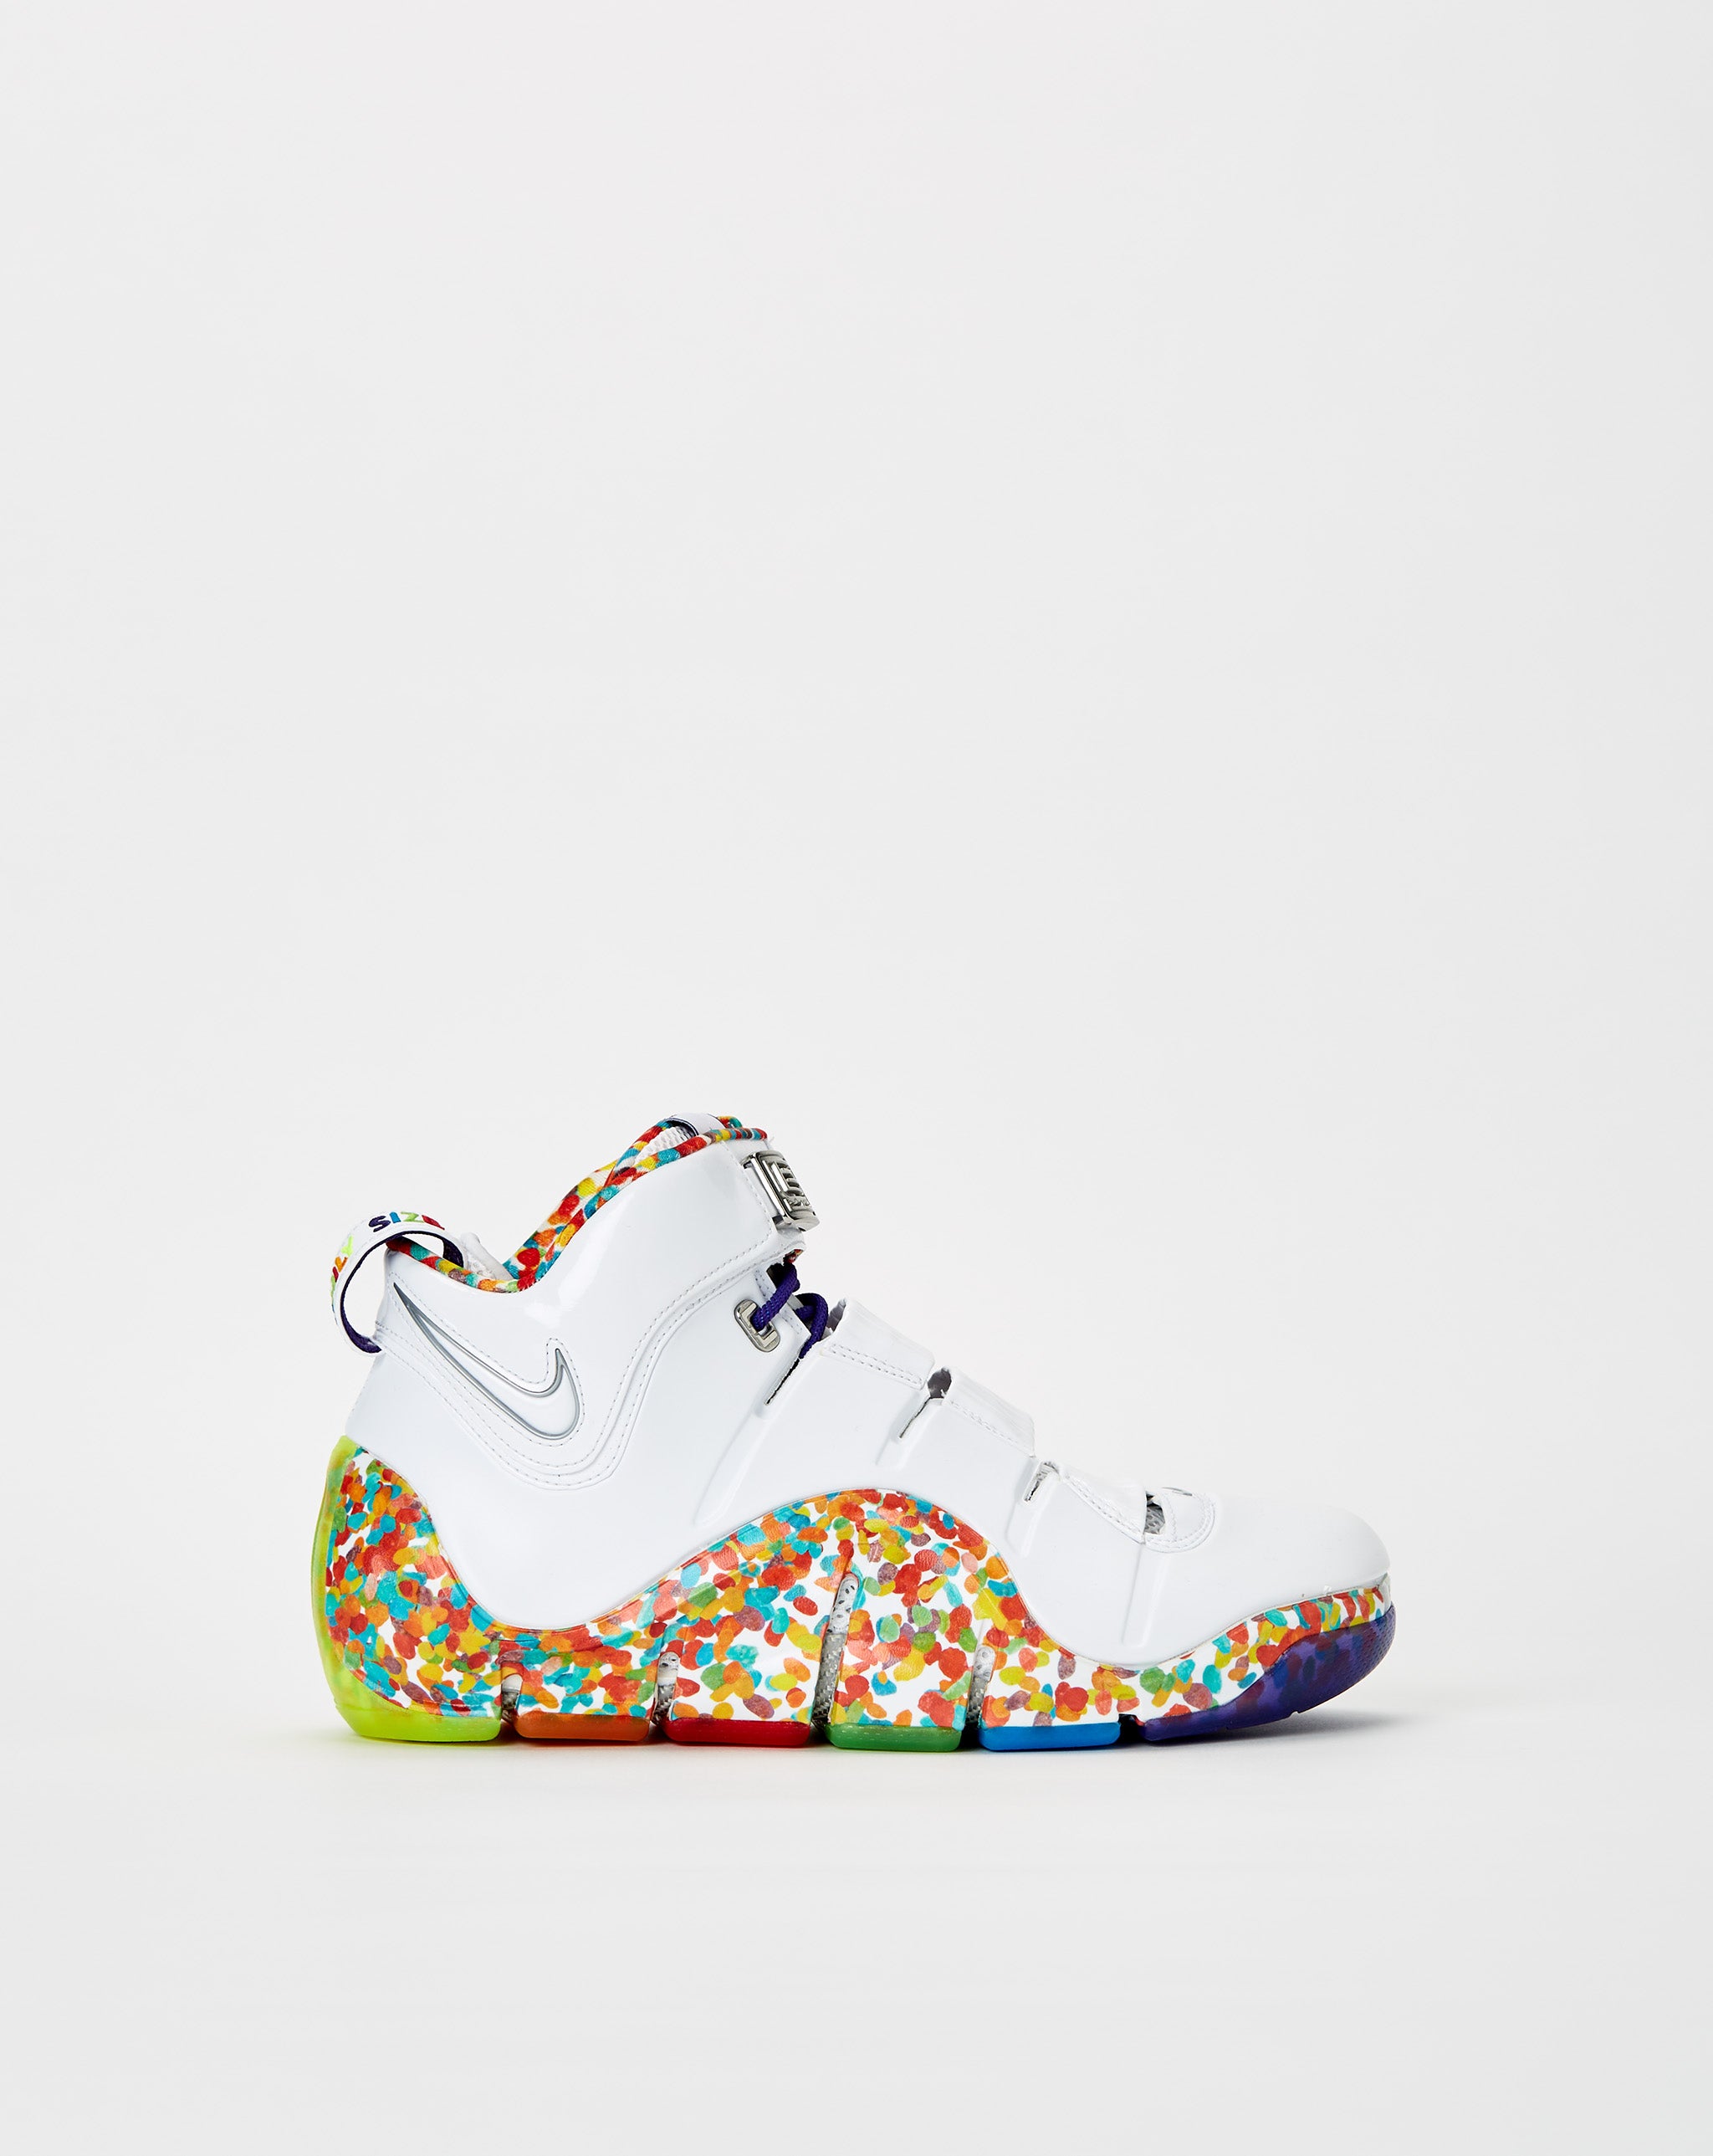 Nike LeBron IV 'Fruity Pebbles'  - XHIBITION